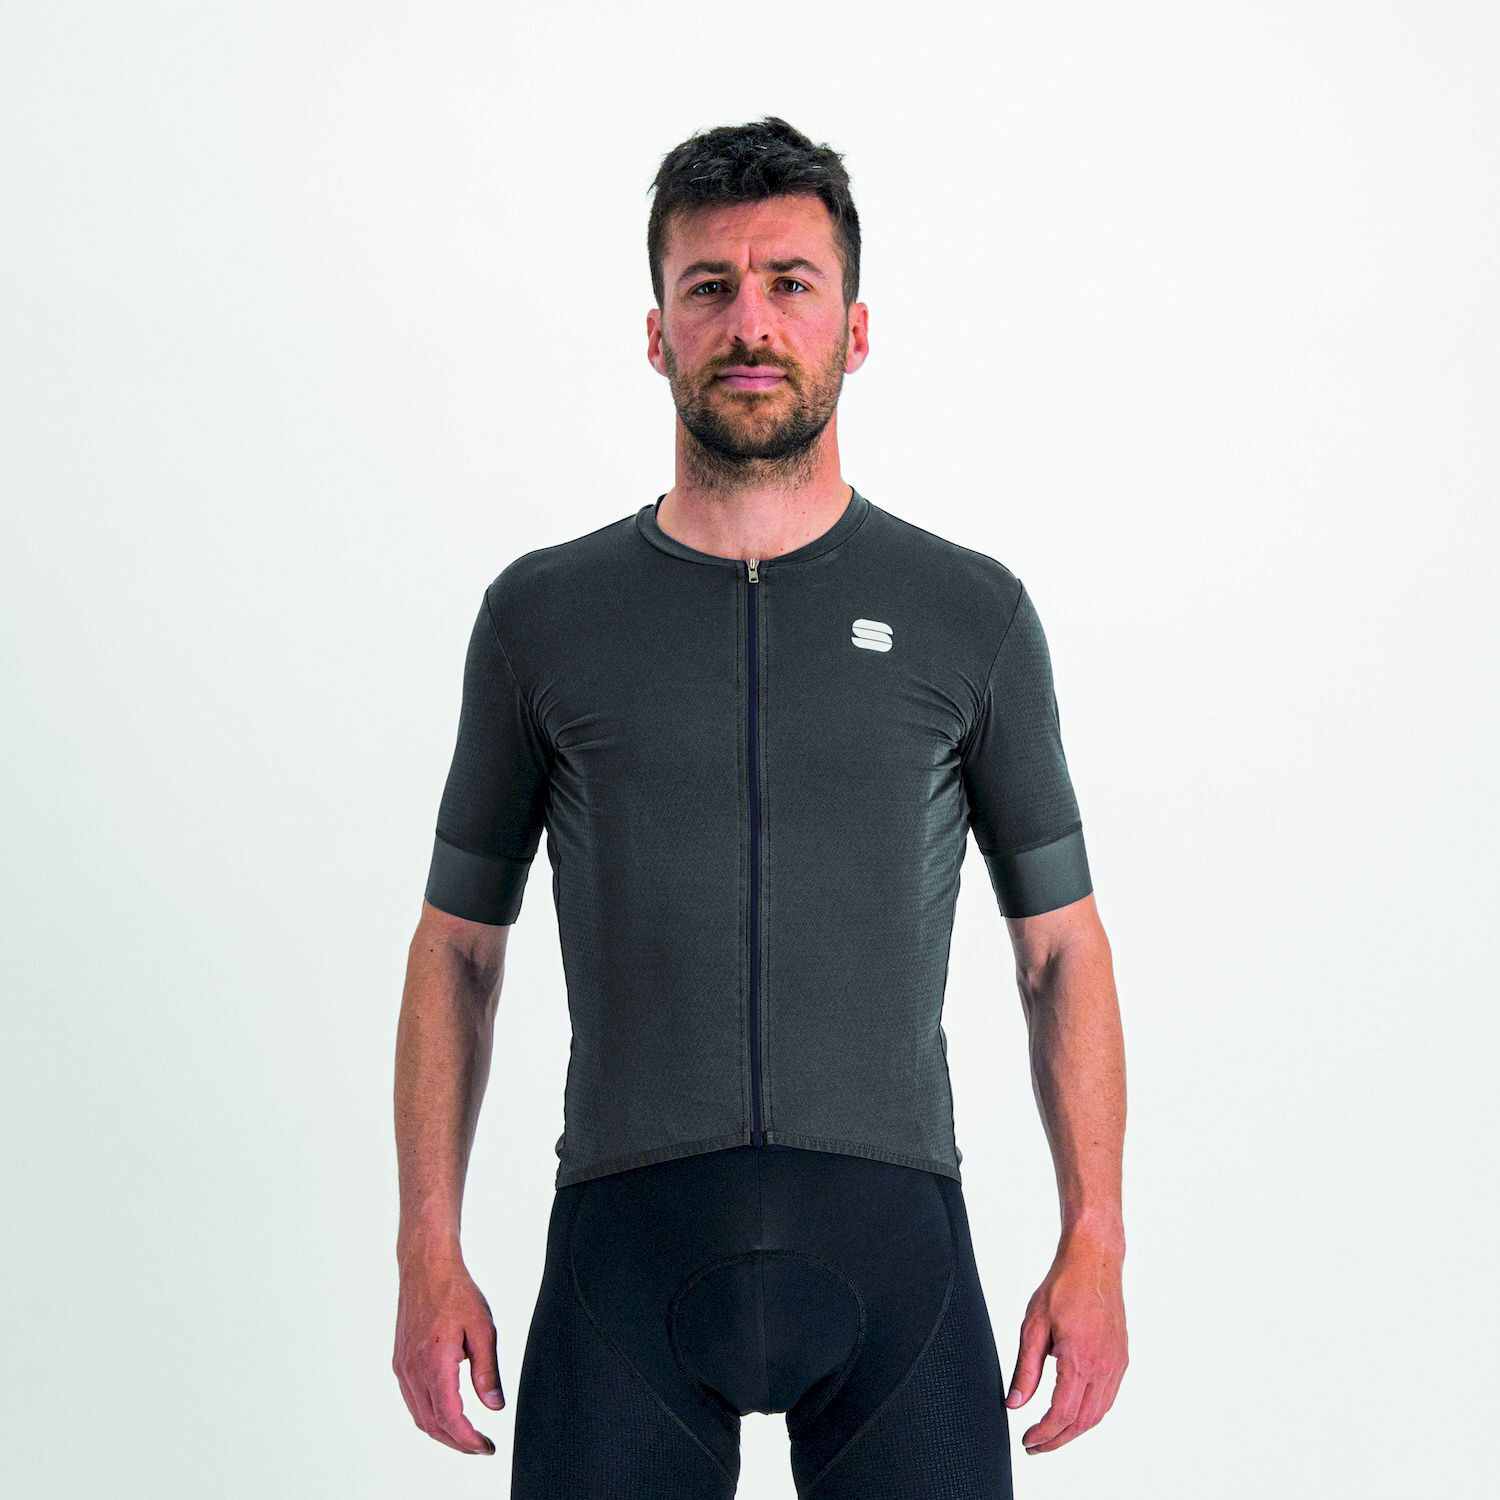 Sportful Monocrom Jersey - Cycling jersey - Men's